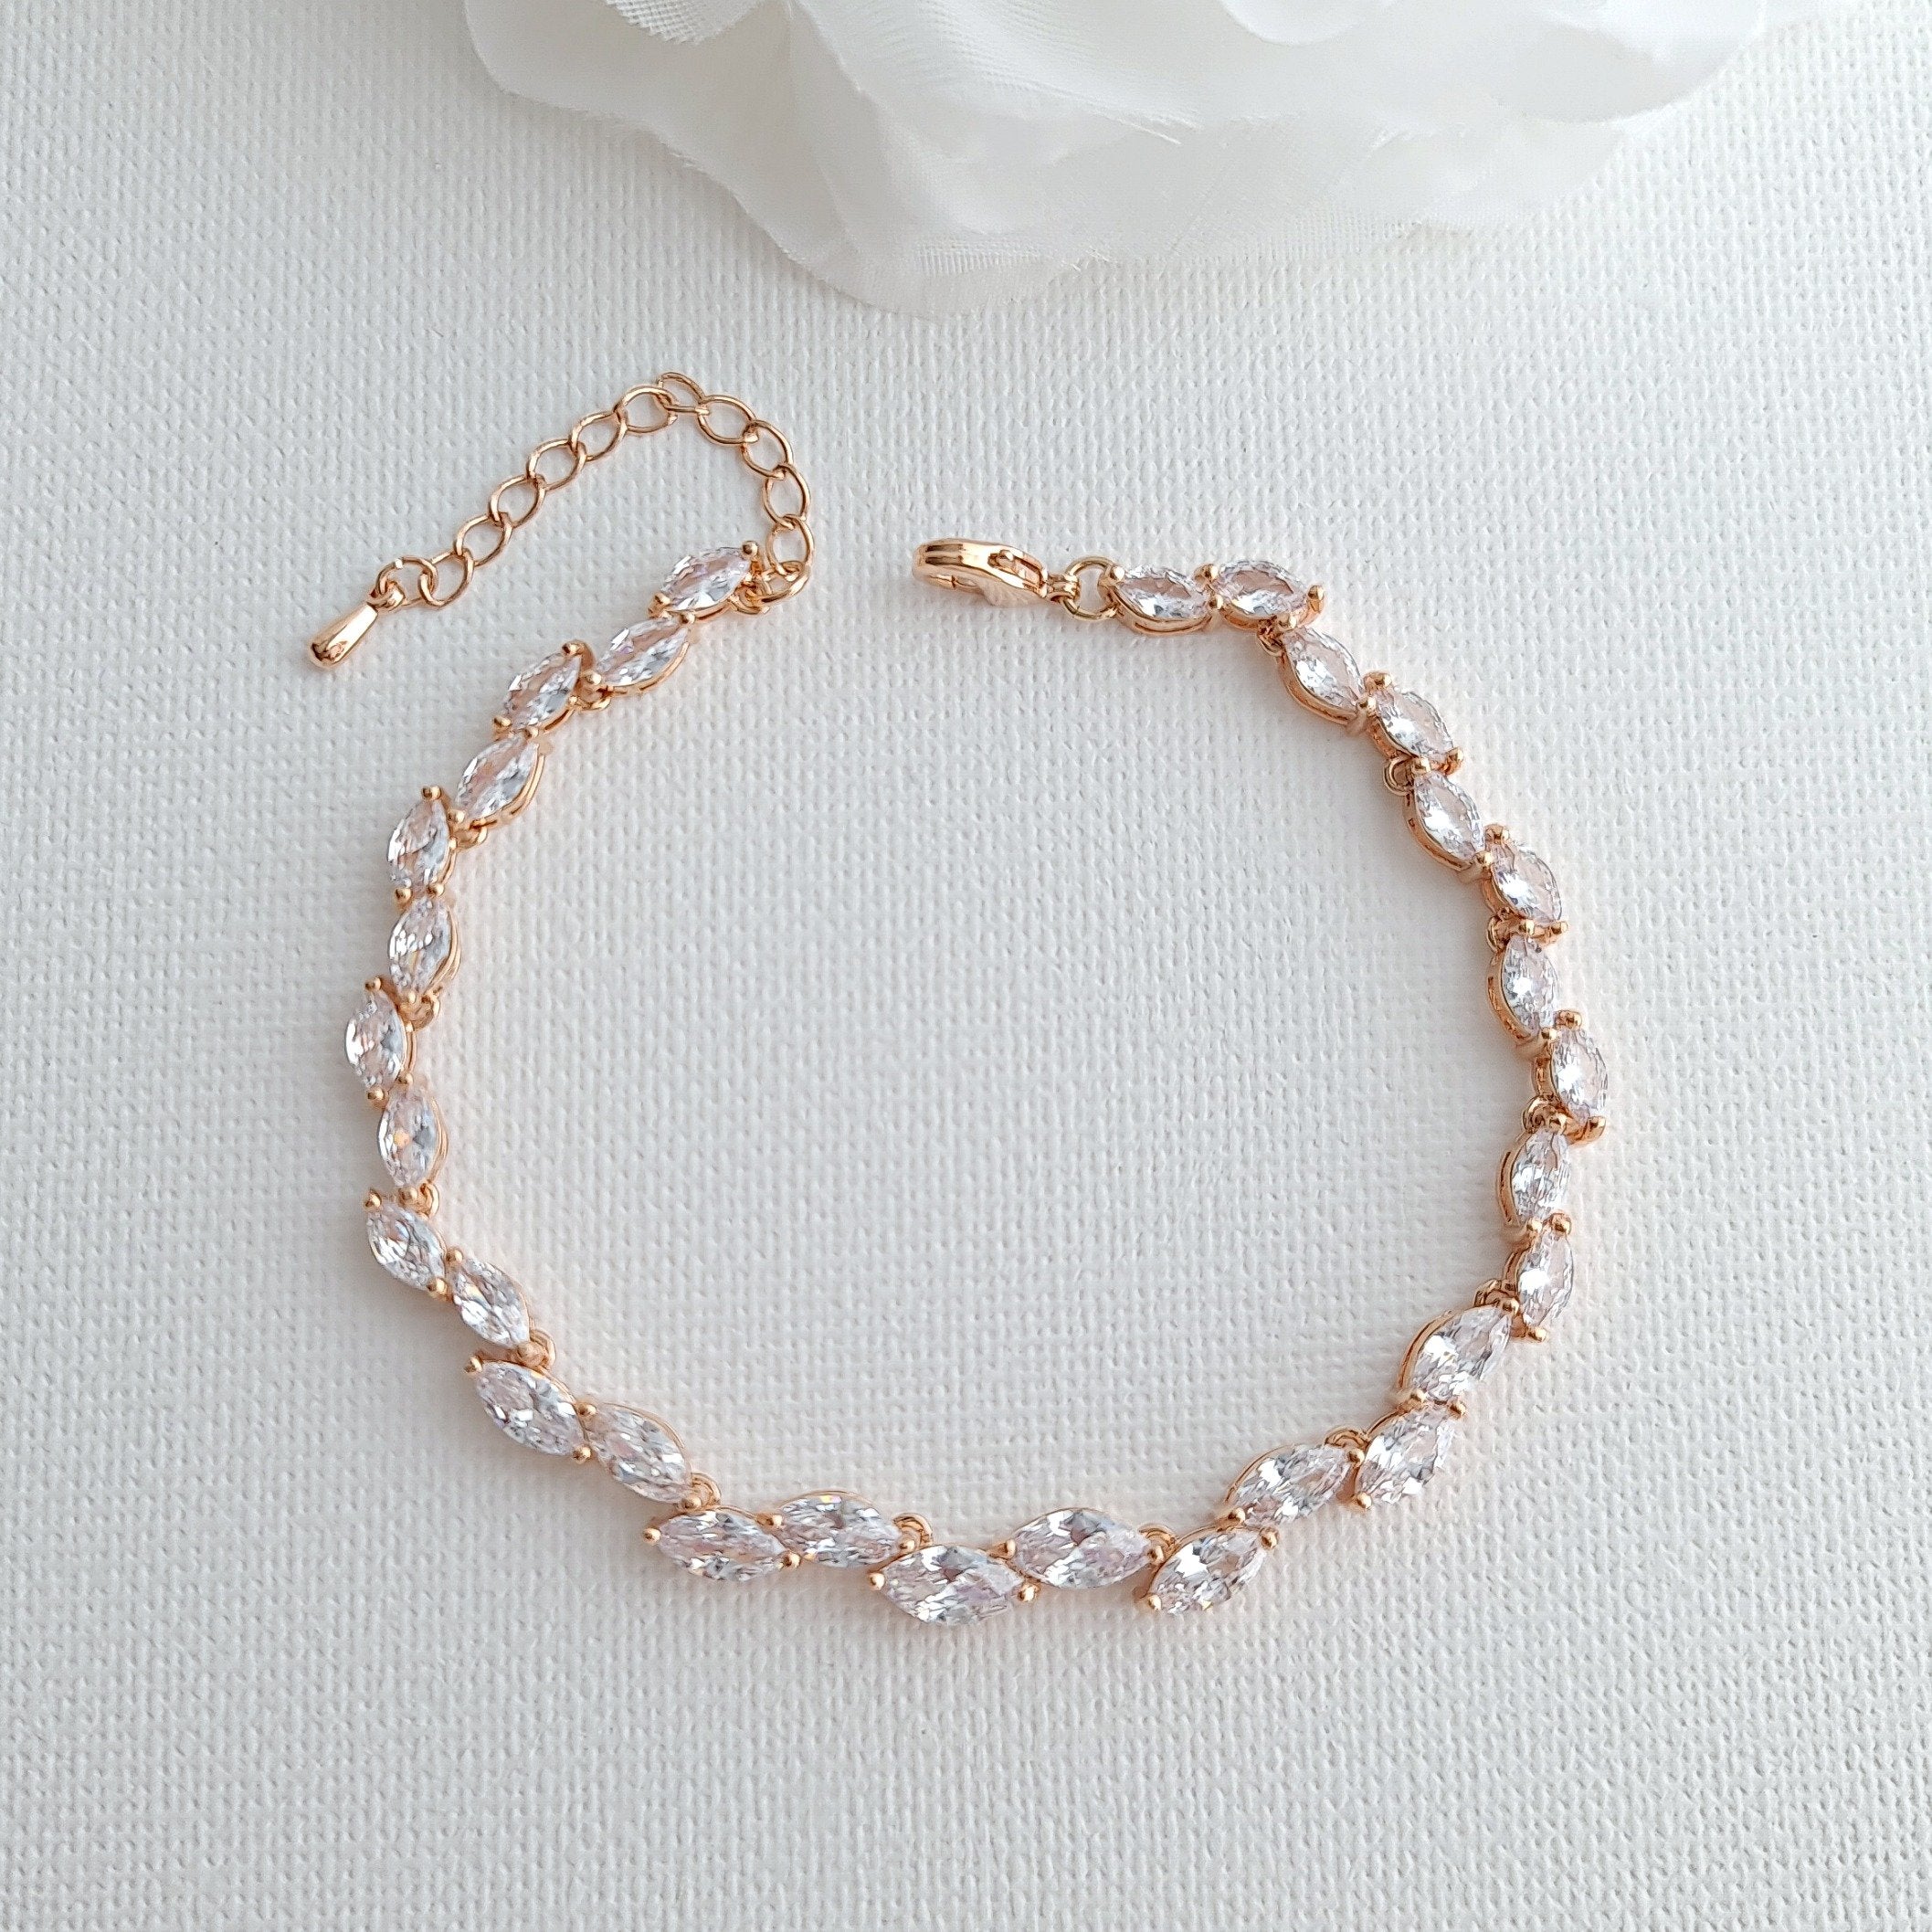 Exquisite Rose Gold Plated CZ Framed Pears Wedding Bracelet